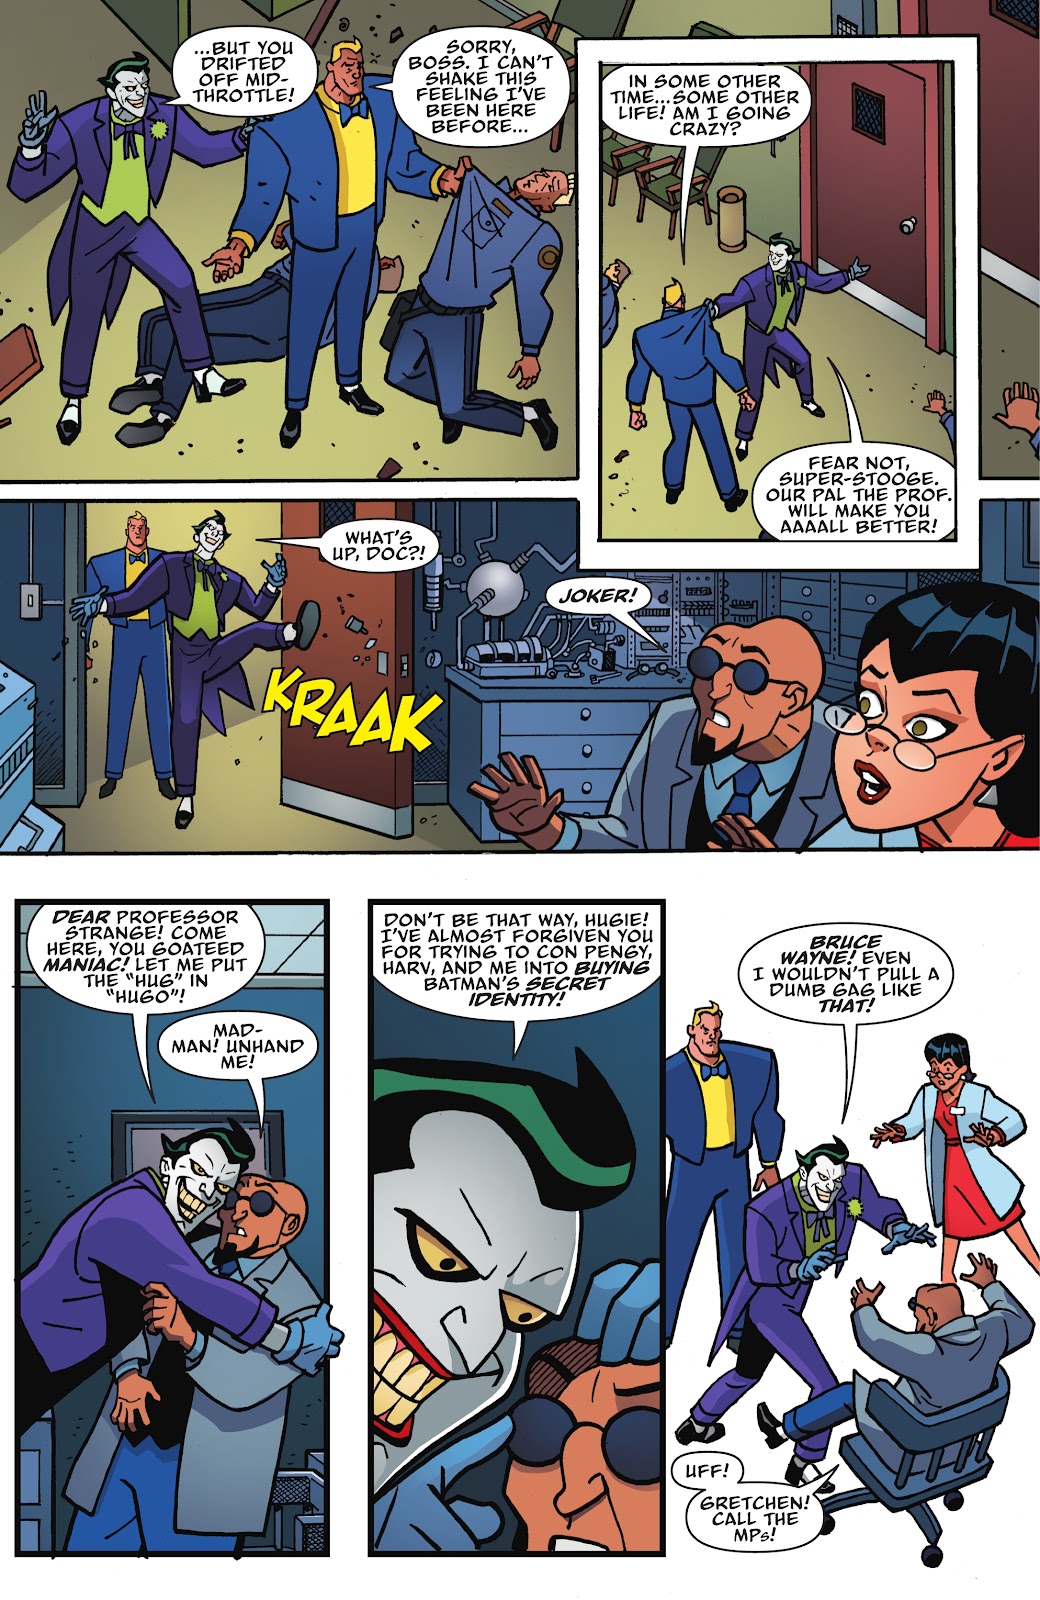 Batman: The Adventures Continue Season Three issue 4 - Page 7